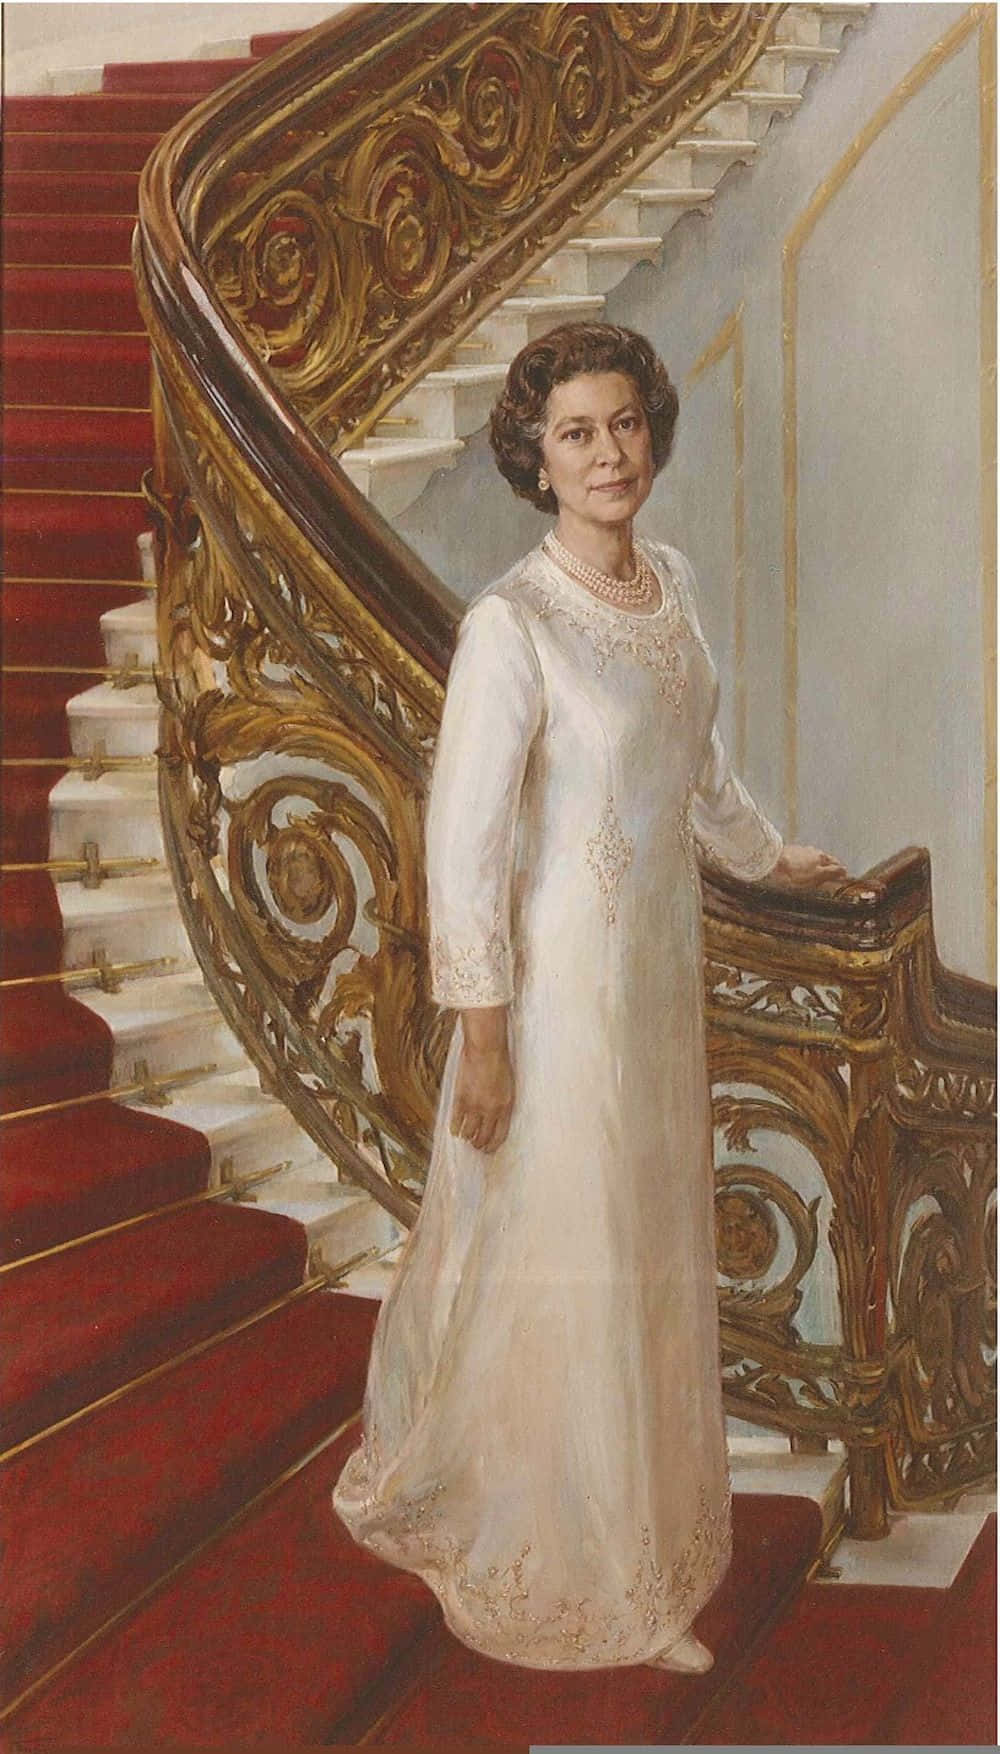 Ritrattodella Regina Elisabetta Ii In Abiti Regali